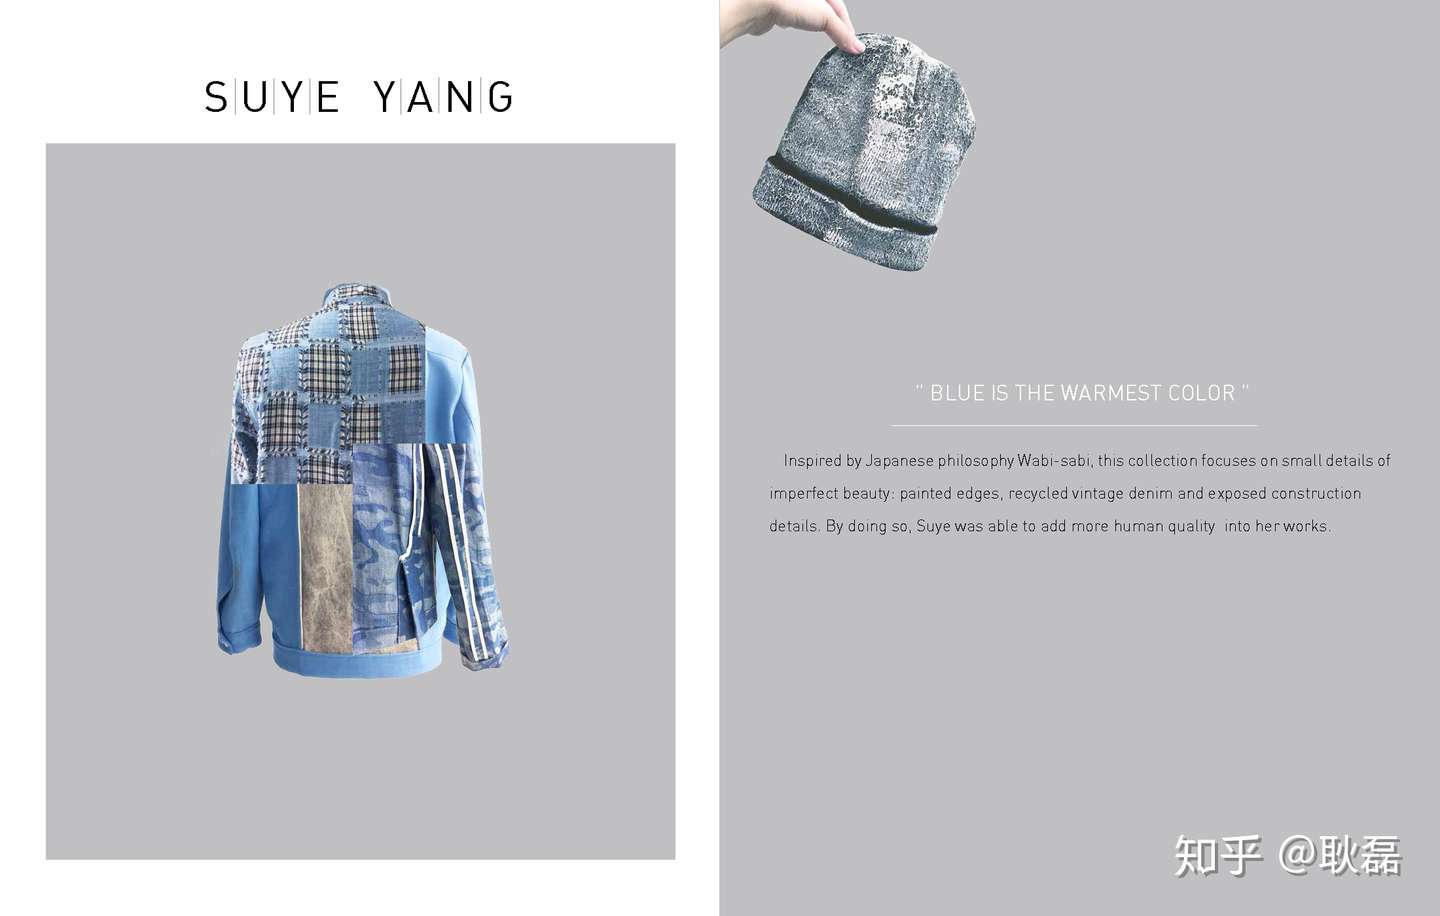 Parsons帕森斯设计学院服装设计专业学生suye Yang的作品 蓝色是最温暖的颜色 知乎